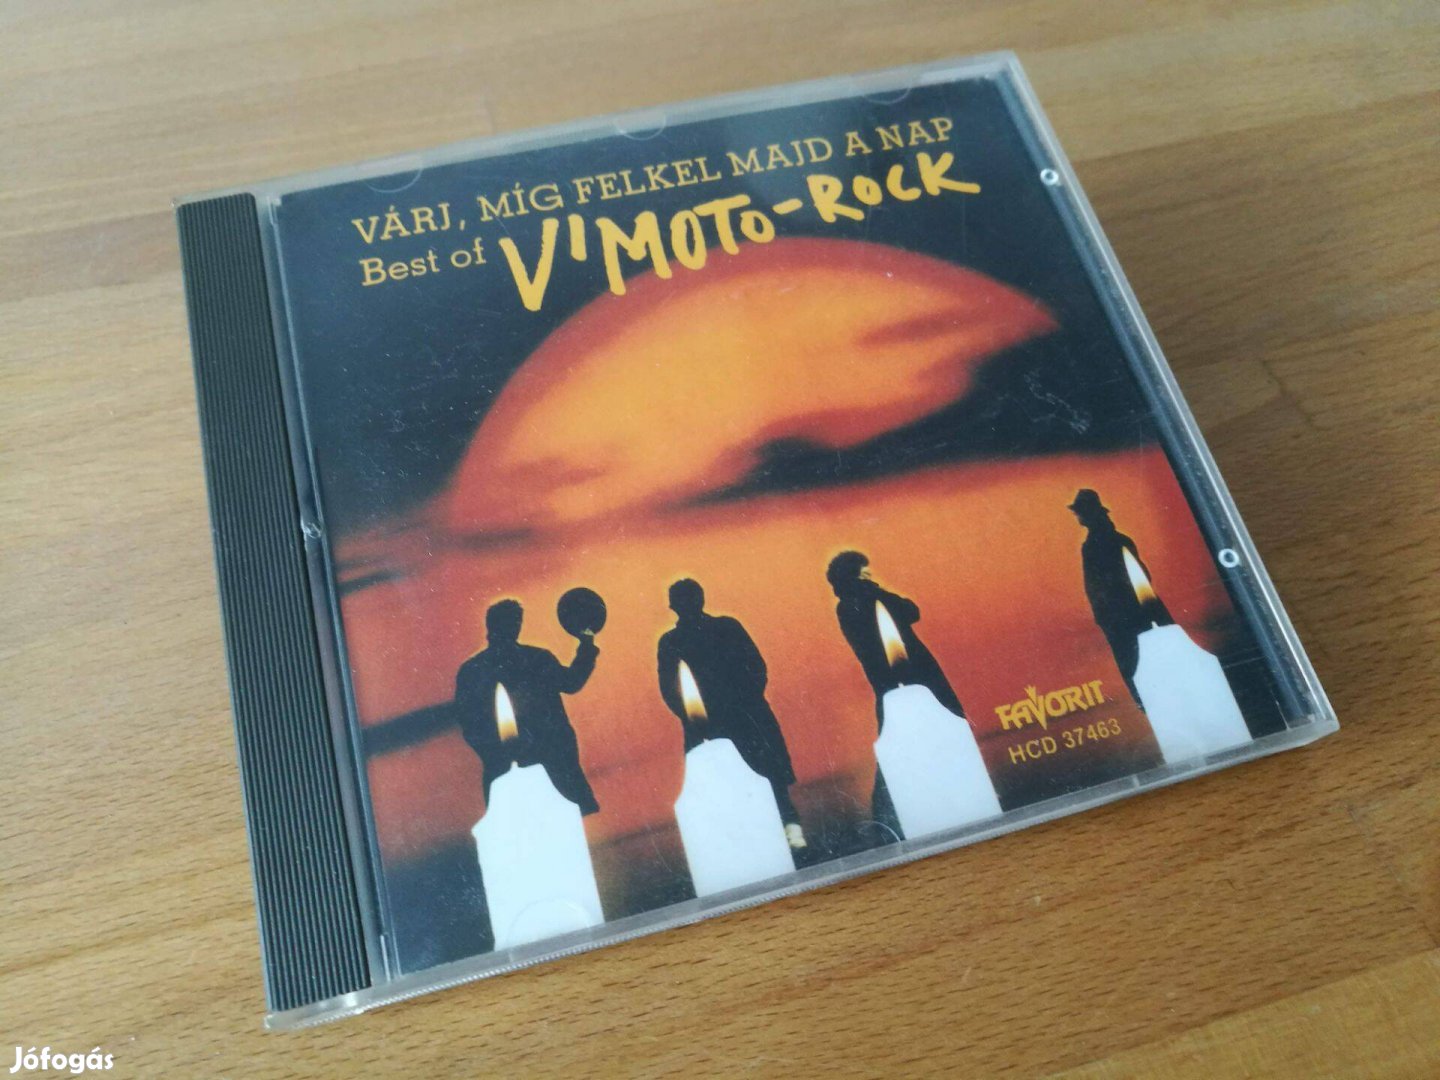 V'Moto-Rock - Várj, míg felkel majd a nap (Hungaroton, 1991, CD)